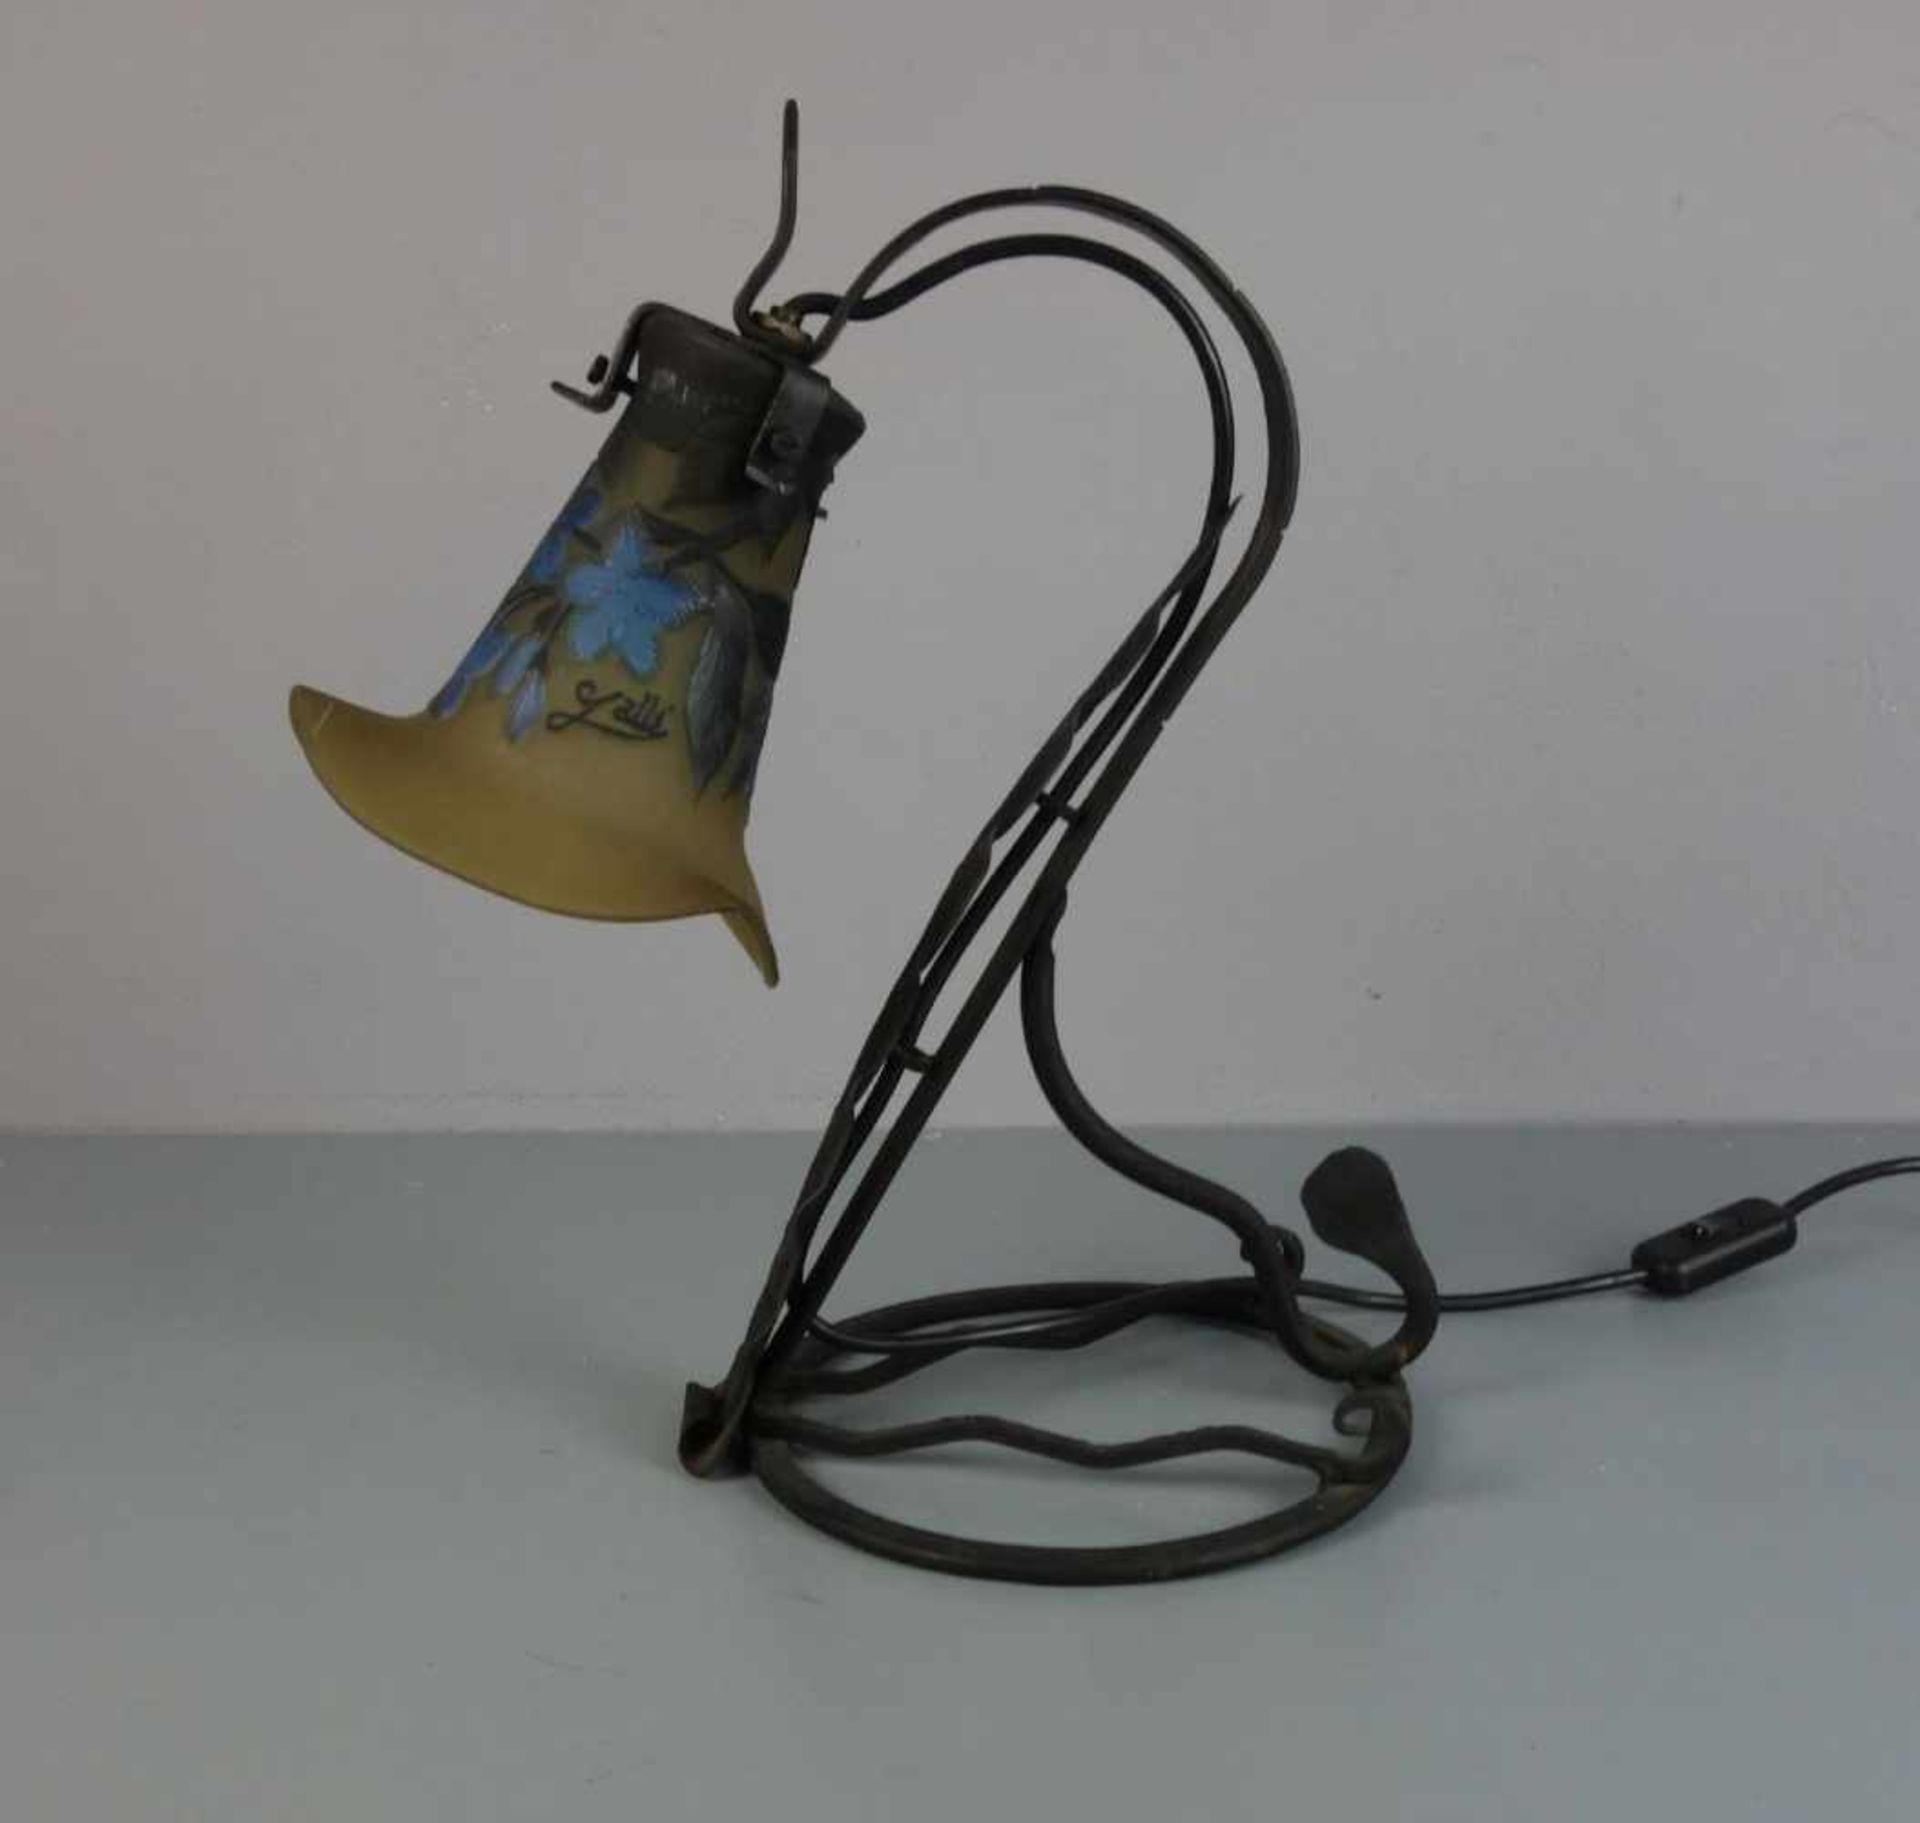 LAMPE / TISCHLAMPE in der Anmutung des Jugendstils, Eisen, einflammige Brennstelle, Glaskuppel, 2. - Image 2 of 4